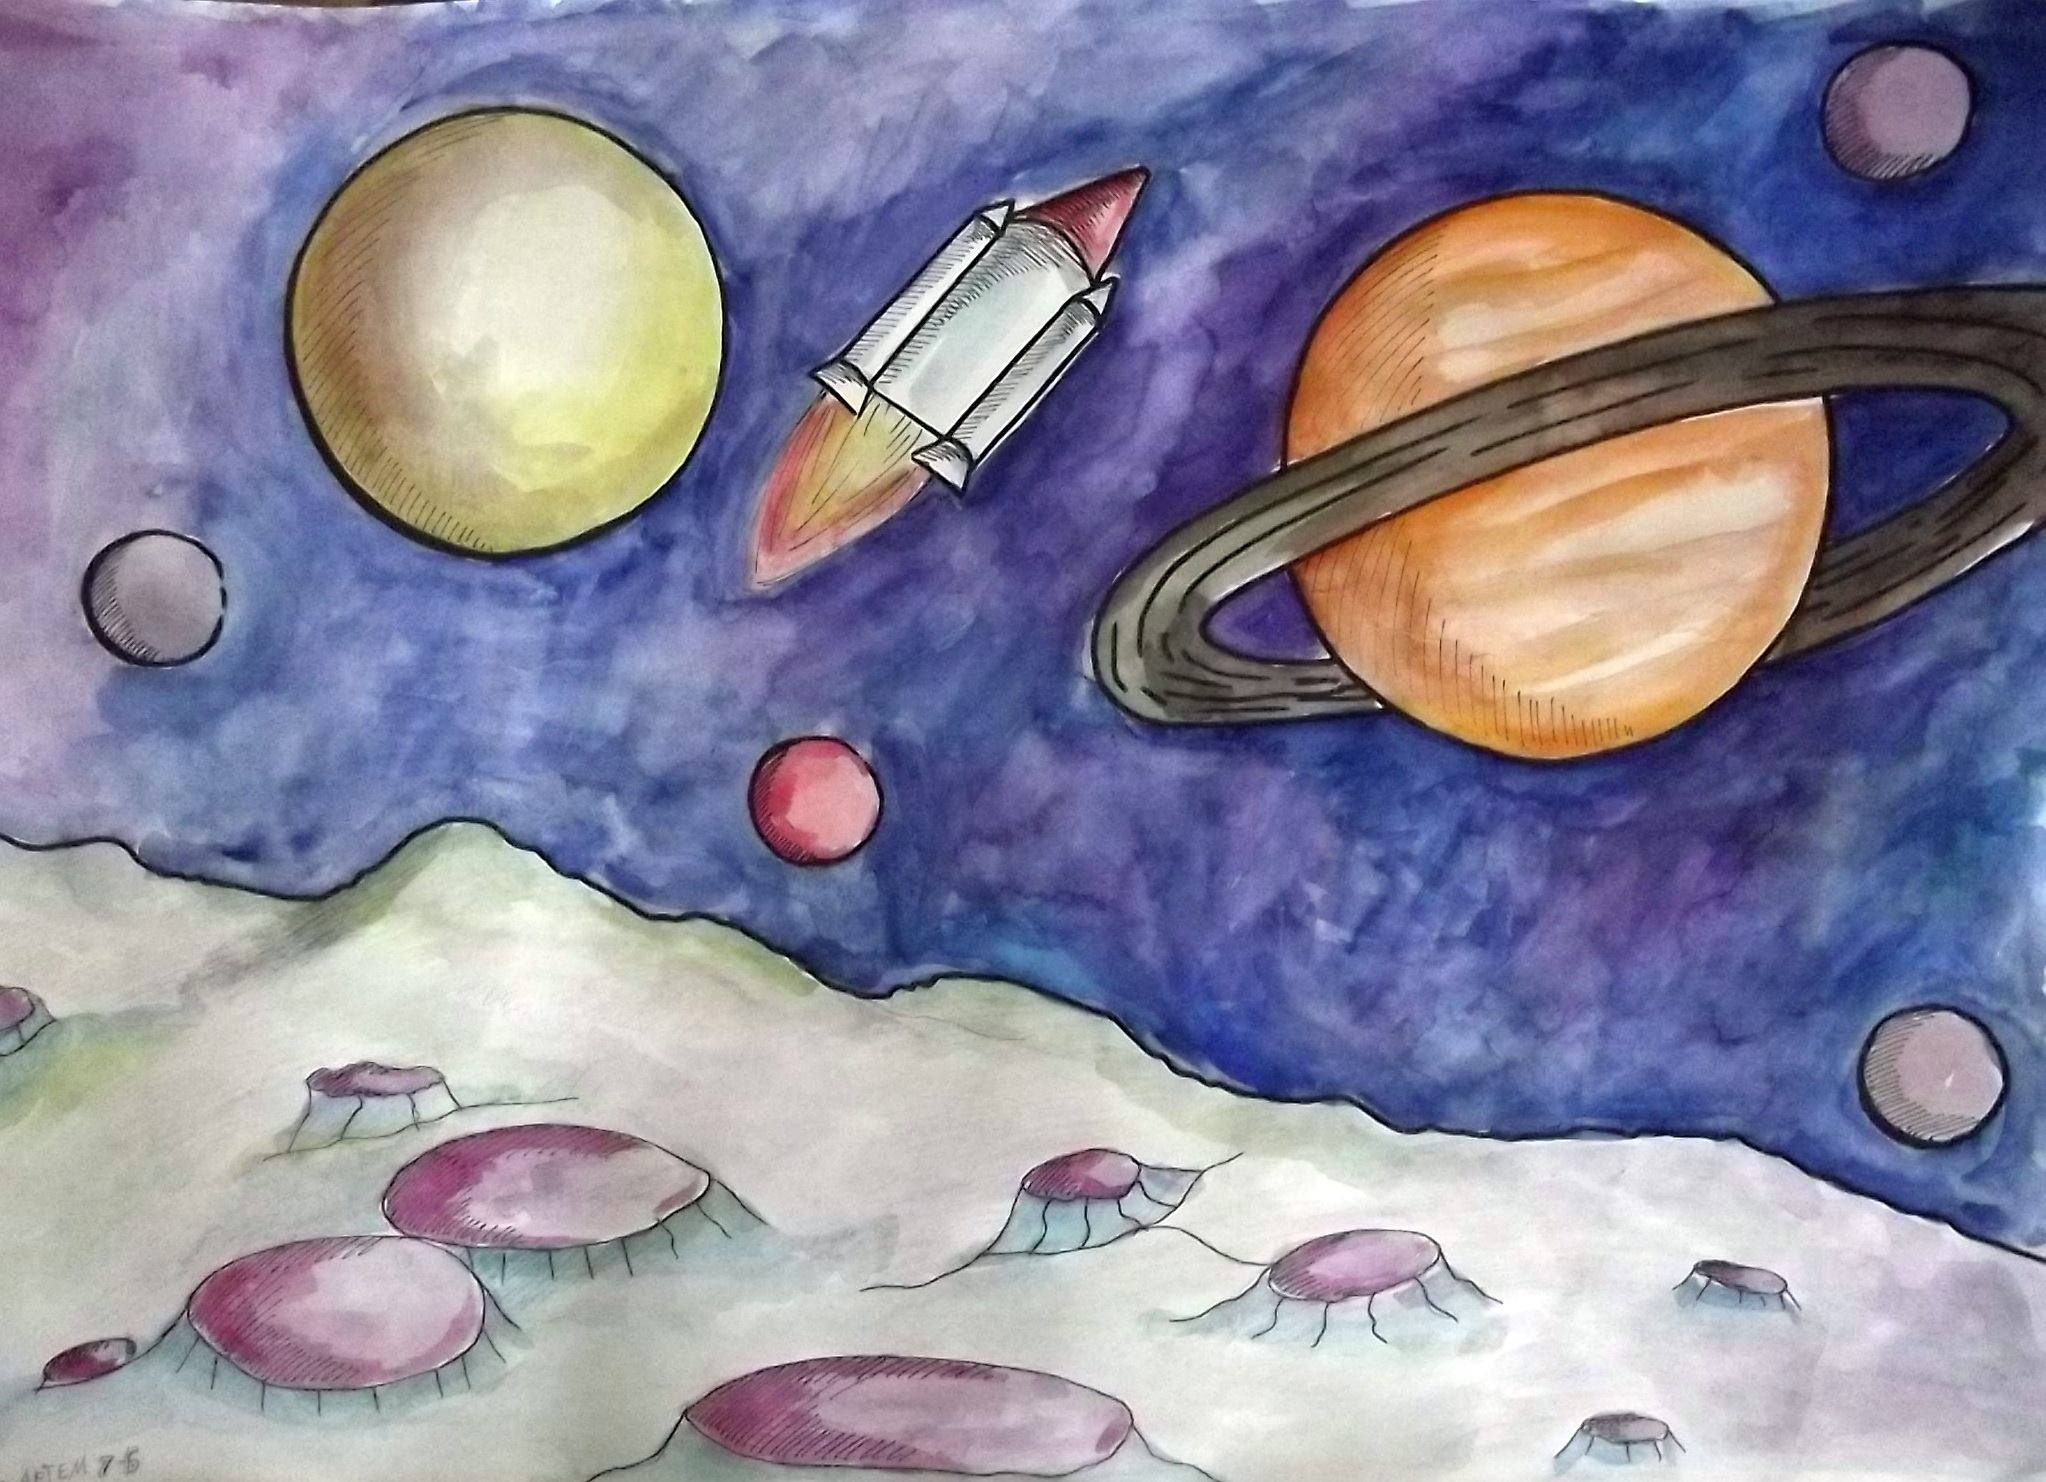 Рисуем космос карандашами. Рисунок на тему космос. Детские рисунки на тему космос. Рисунок на тему космос карандашом. Рисунок на космическую тему карандашом.